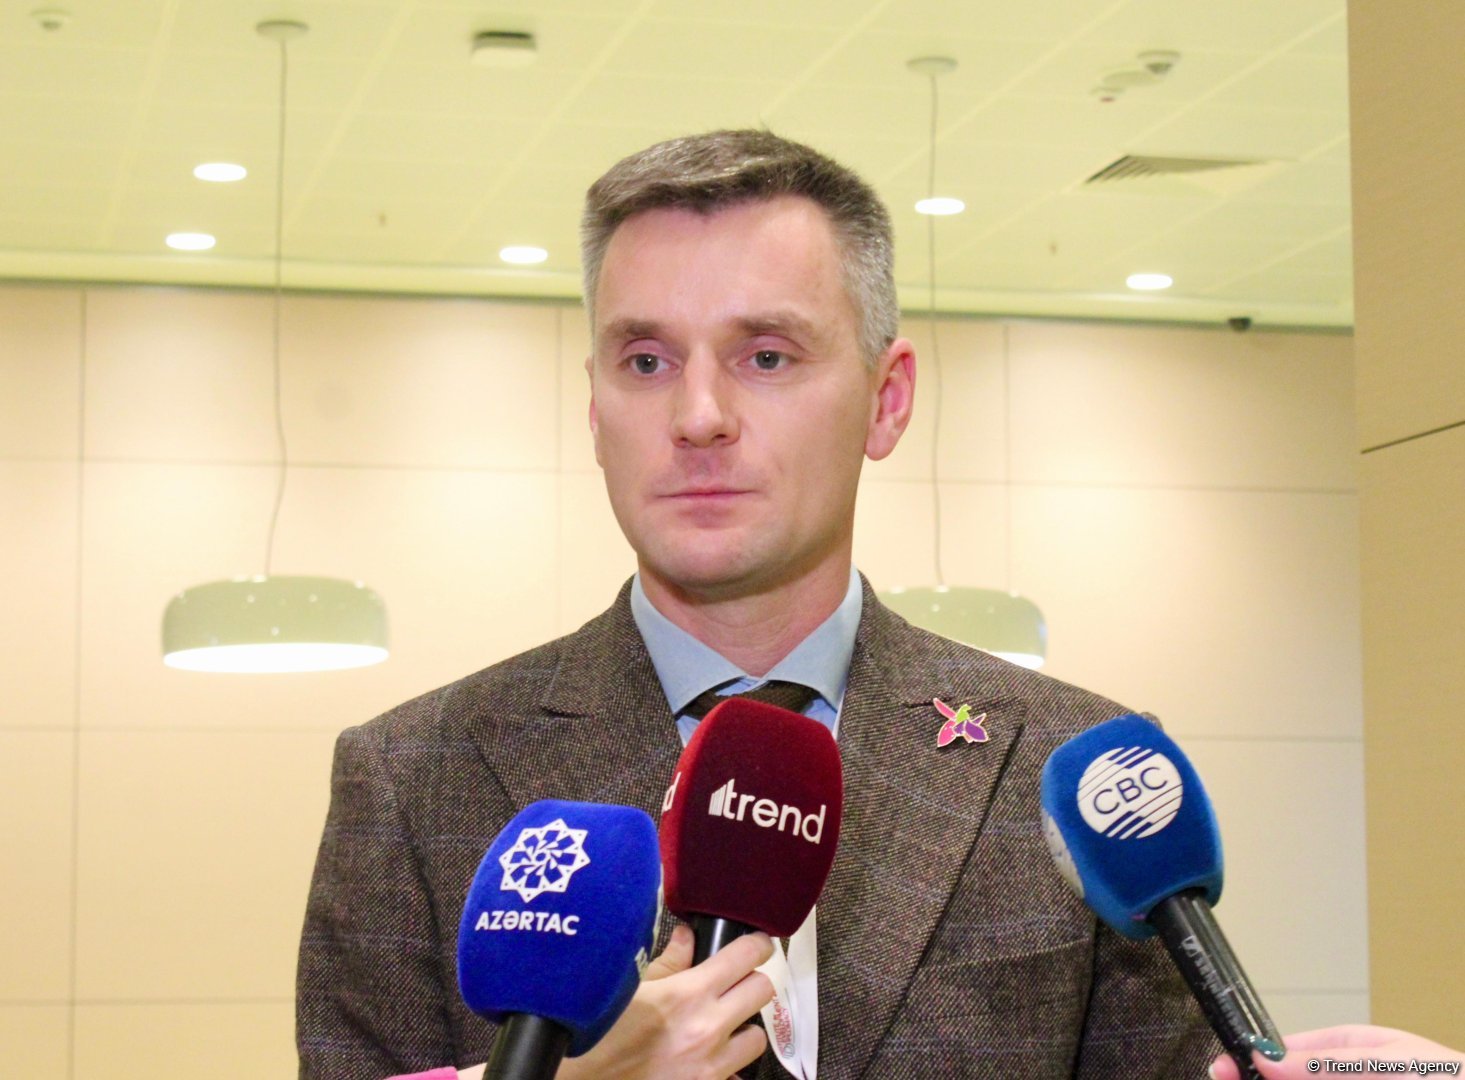 Polish political expert salutes Azerbaijanis for having phenomenal person as head of state